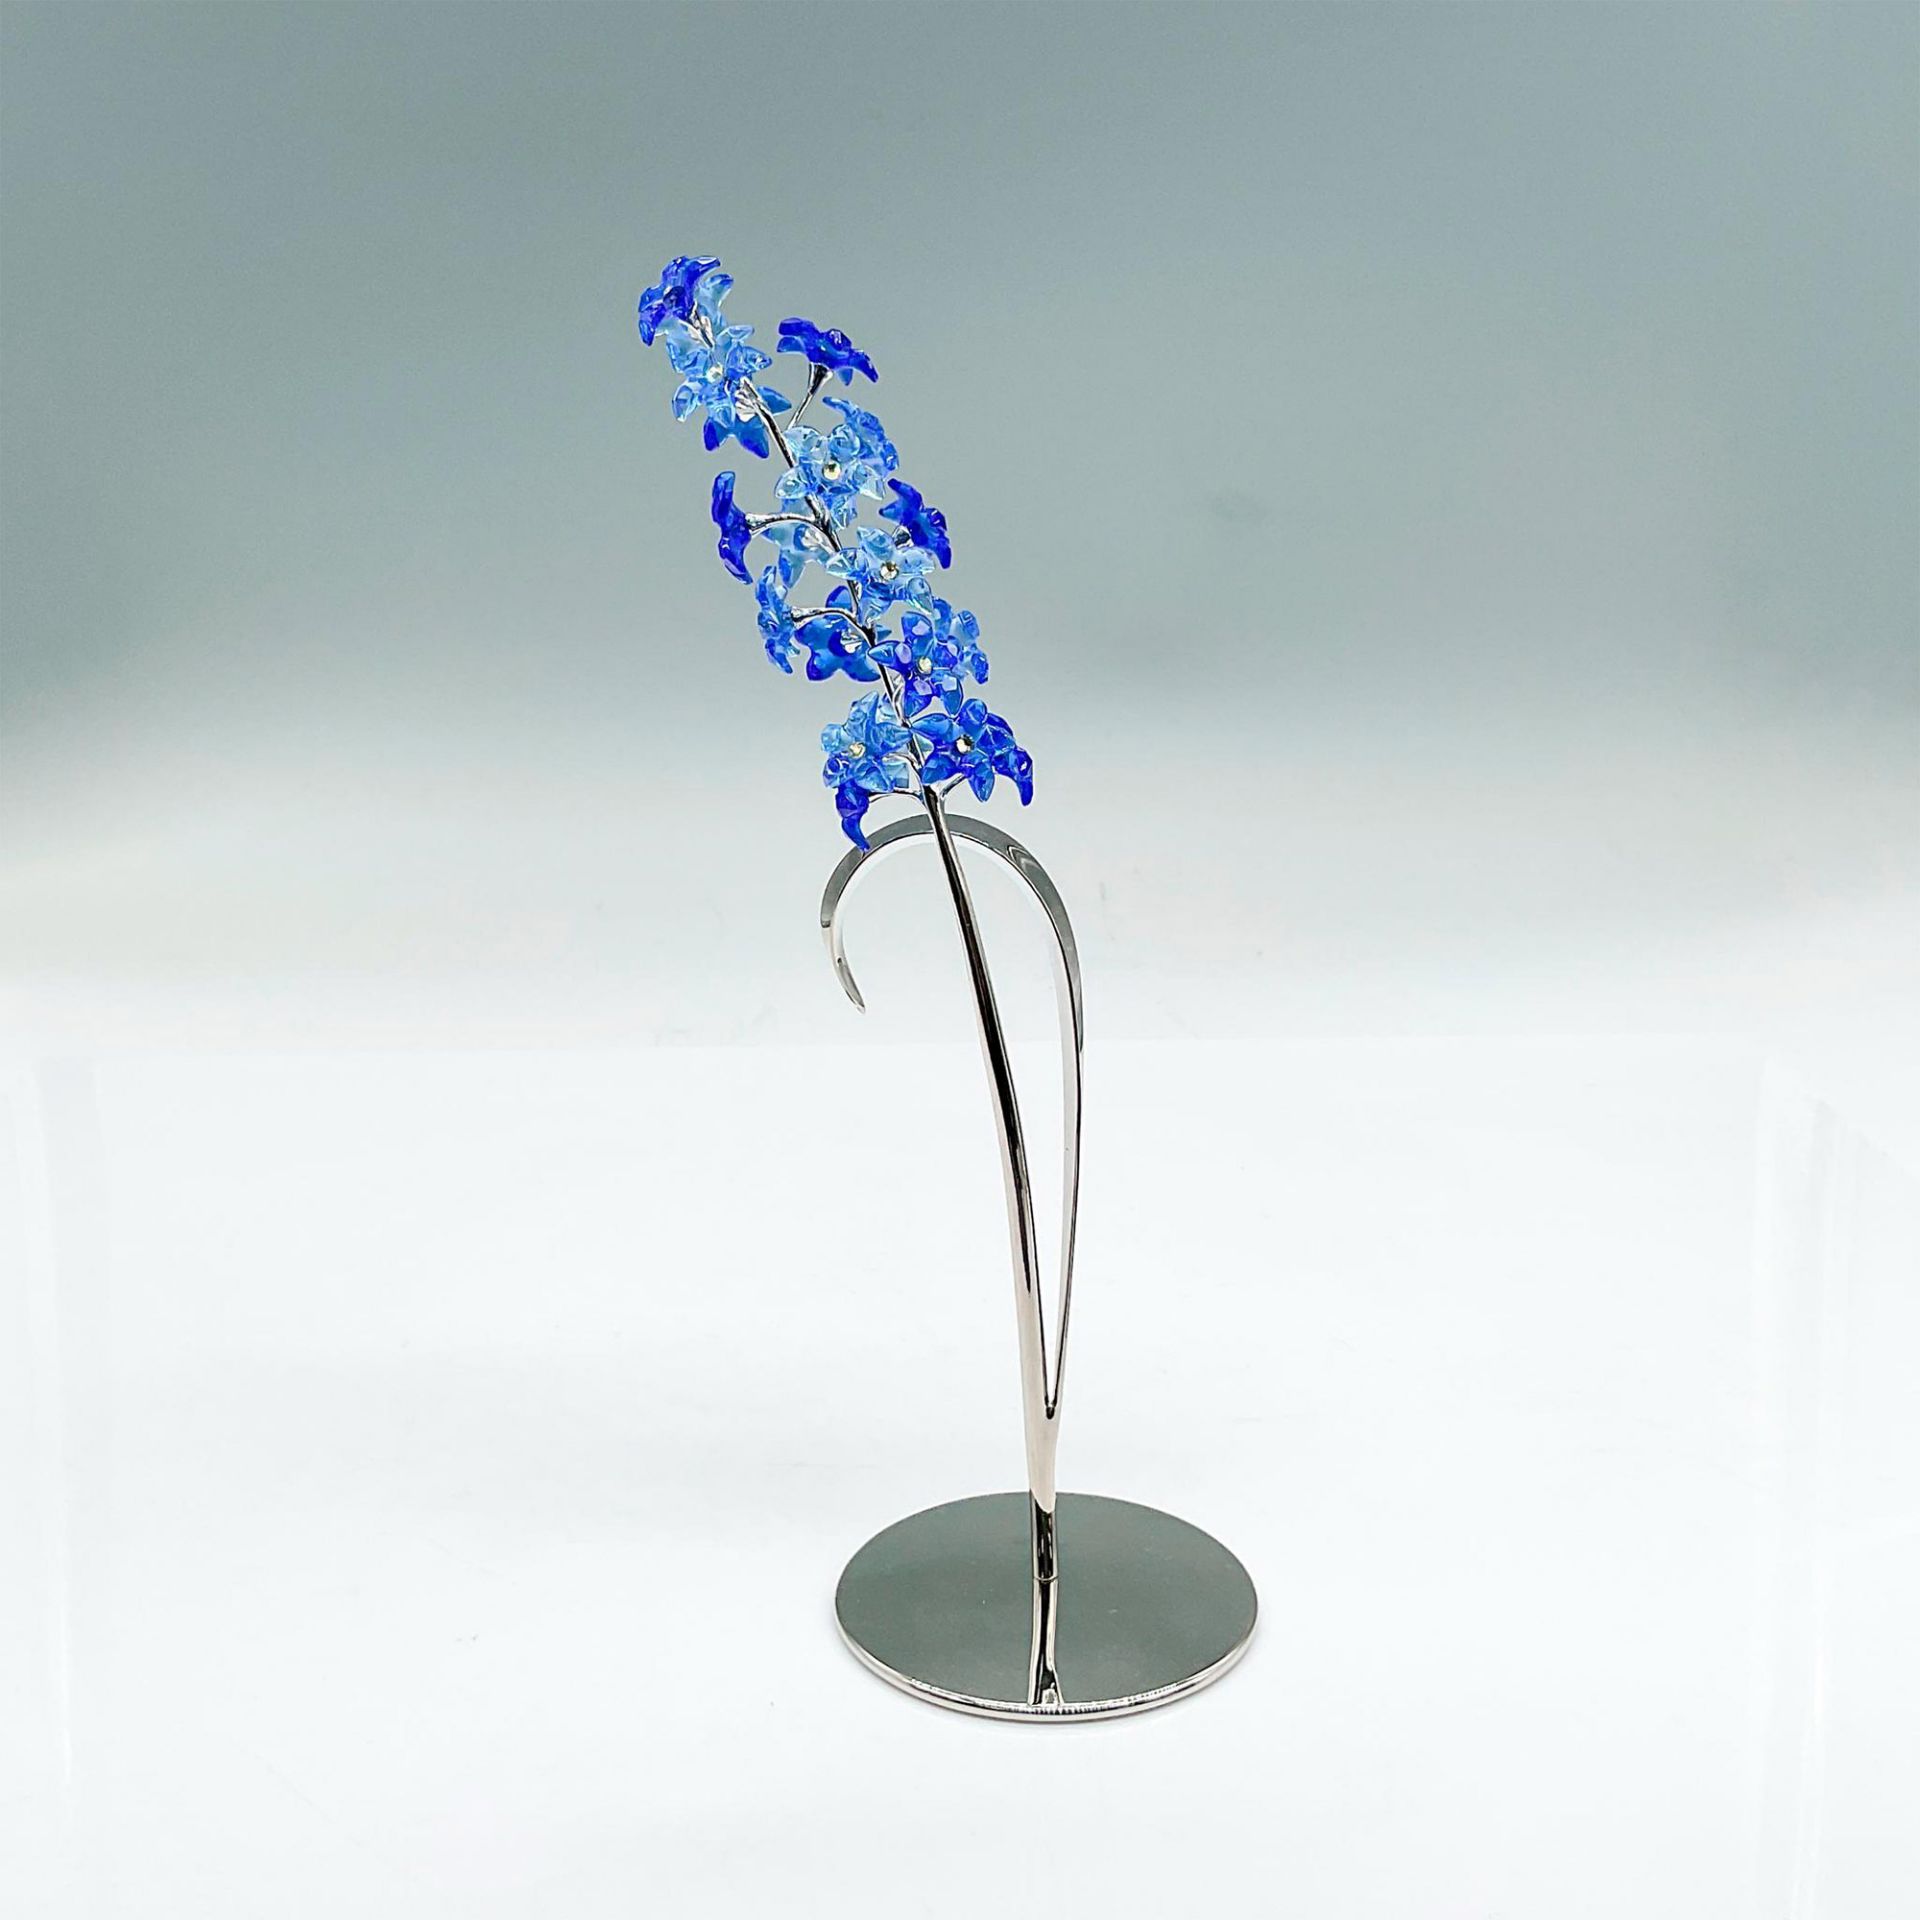 Swarovski Crystal Figurine, Dindori Flowers